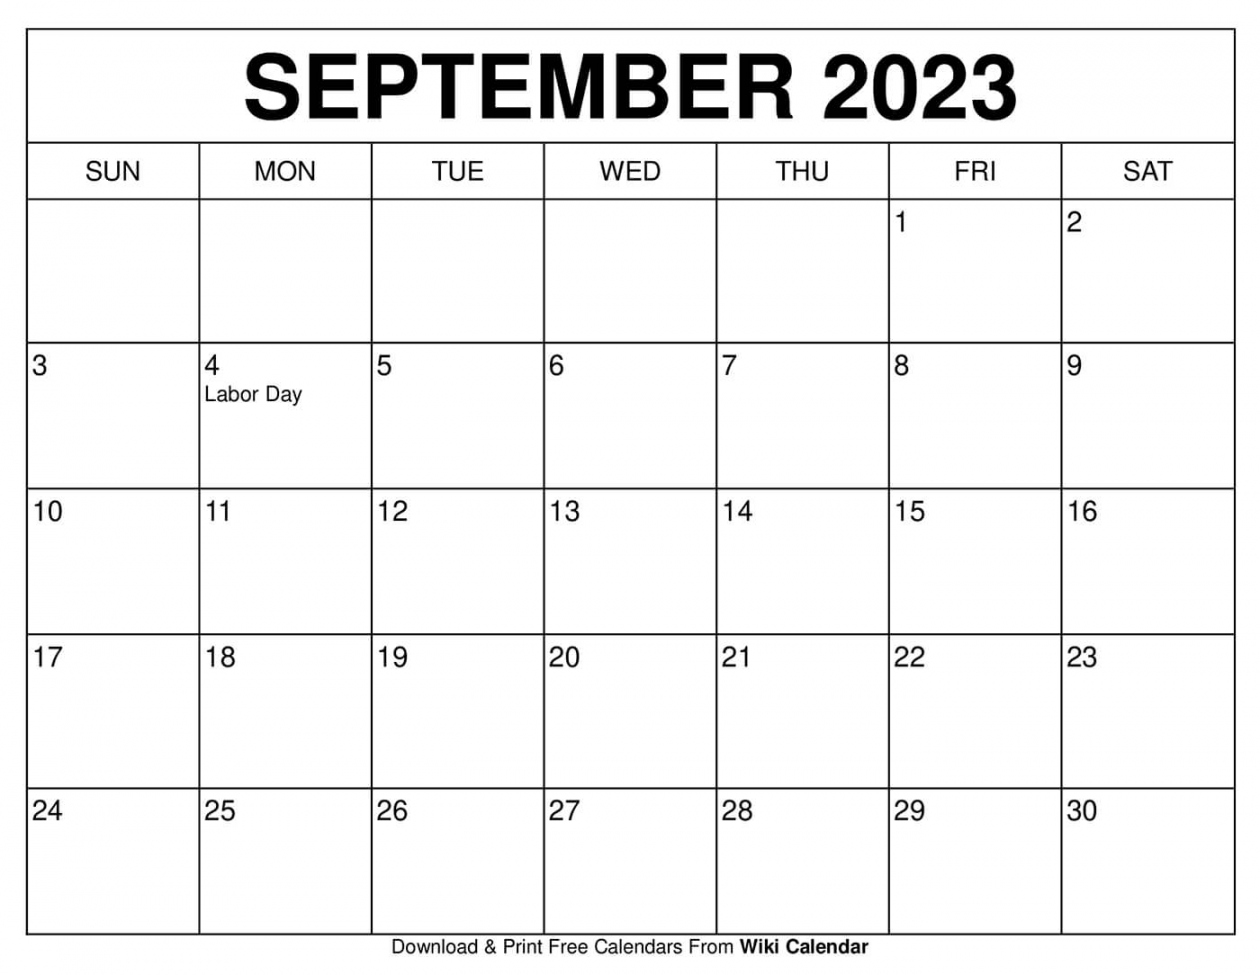 Free Printable September  Calendar Templates With Holidays - FREE Printables - Free Printable September Calendar